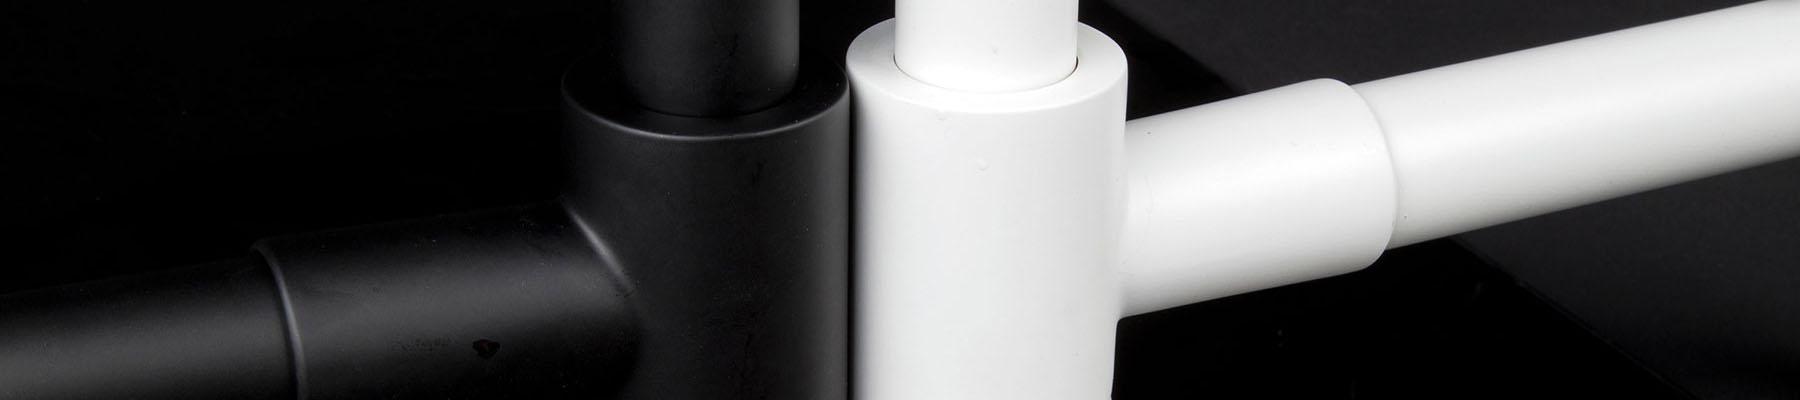 Colección Black & White - Desagües para lavabo